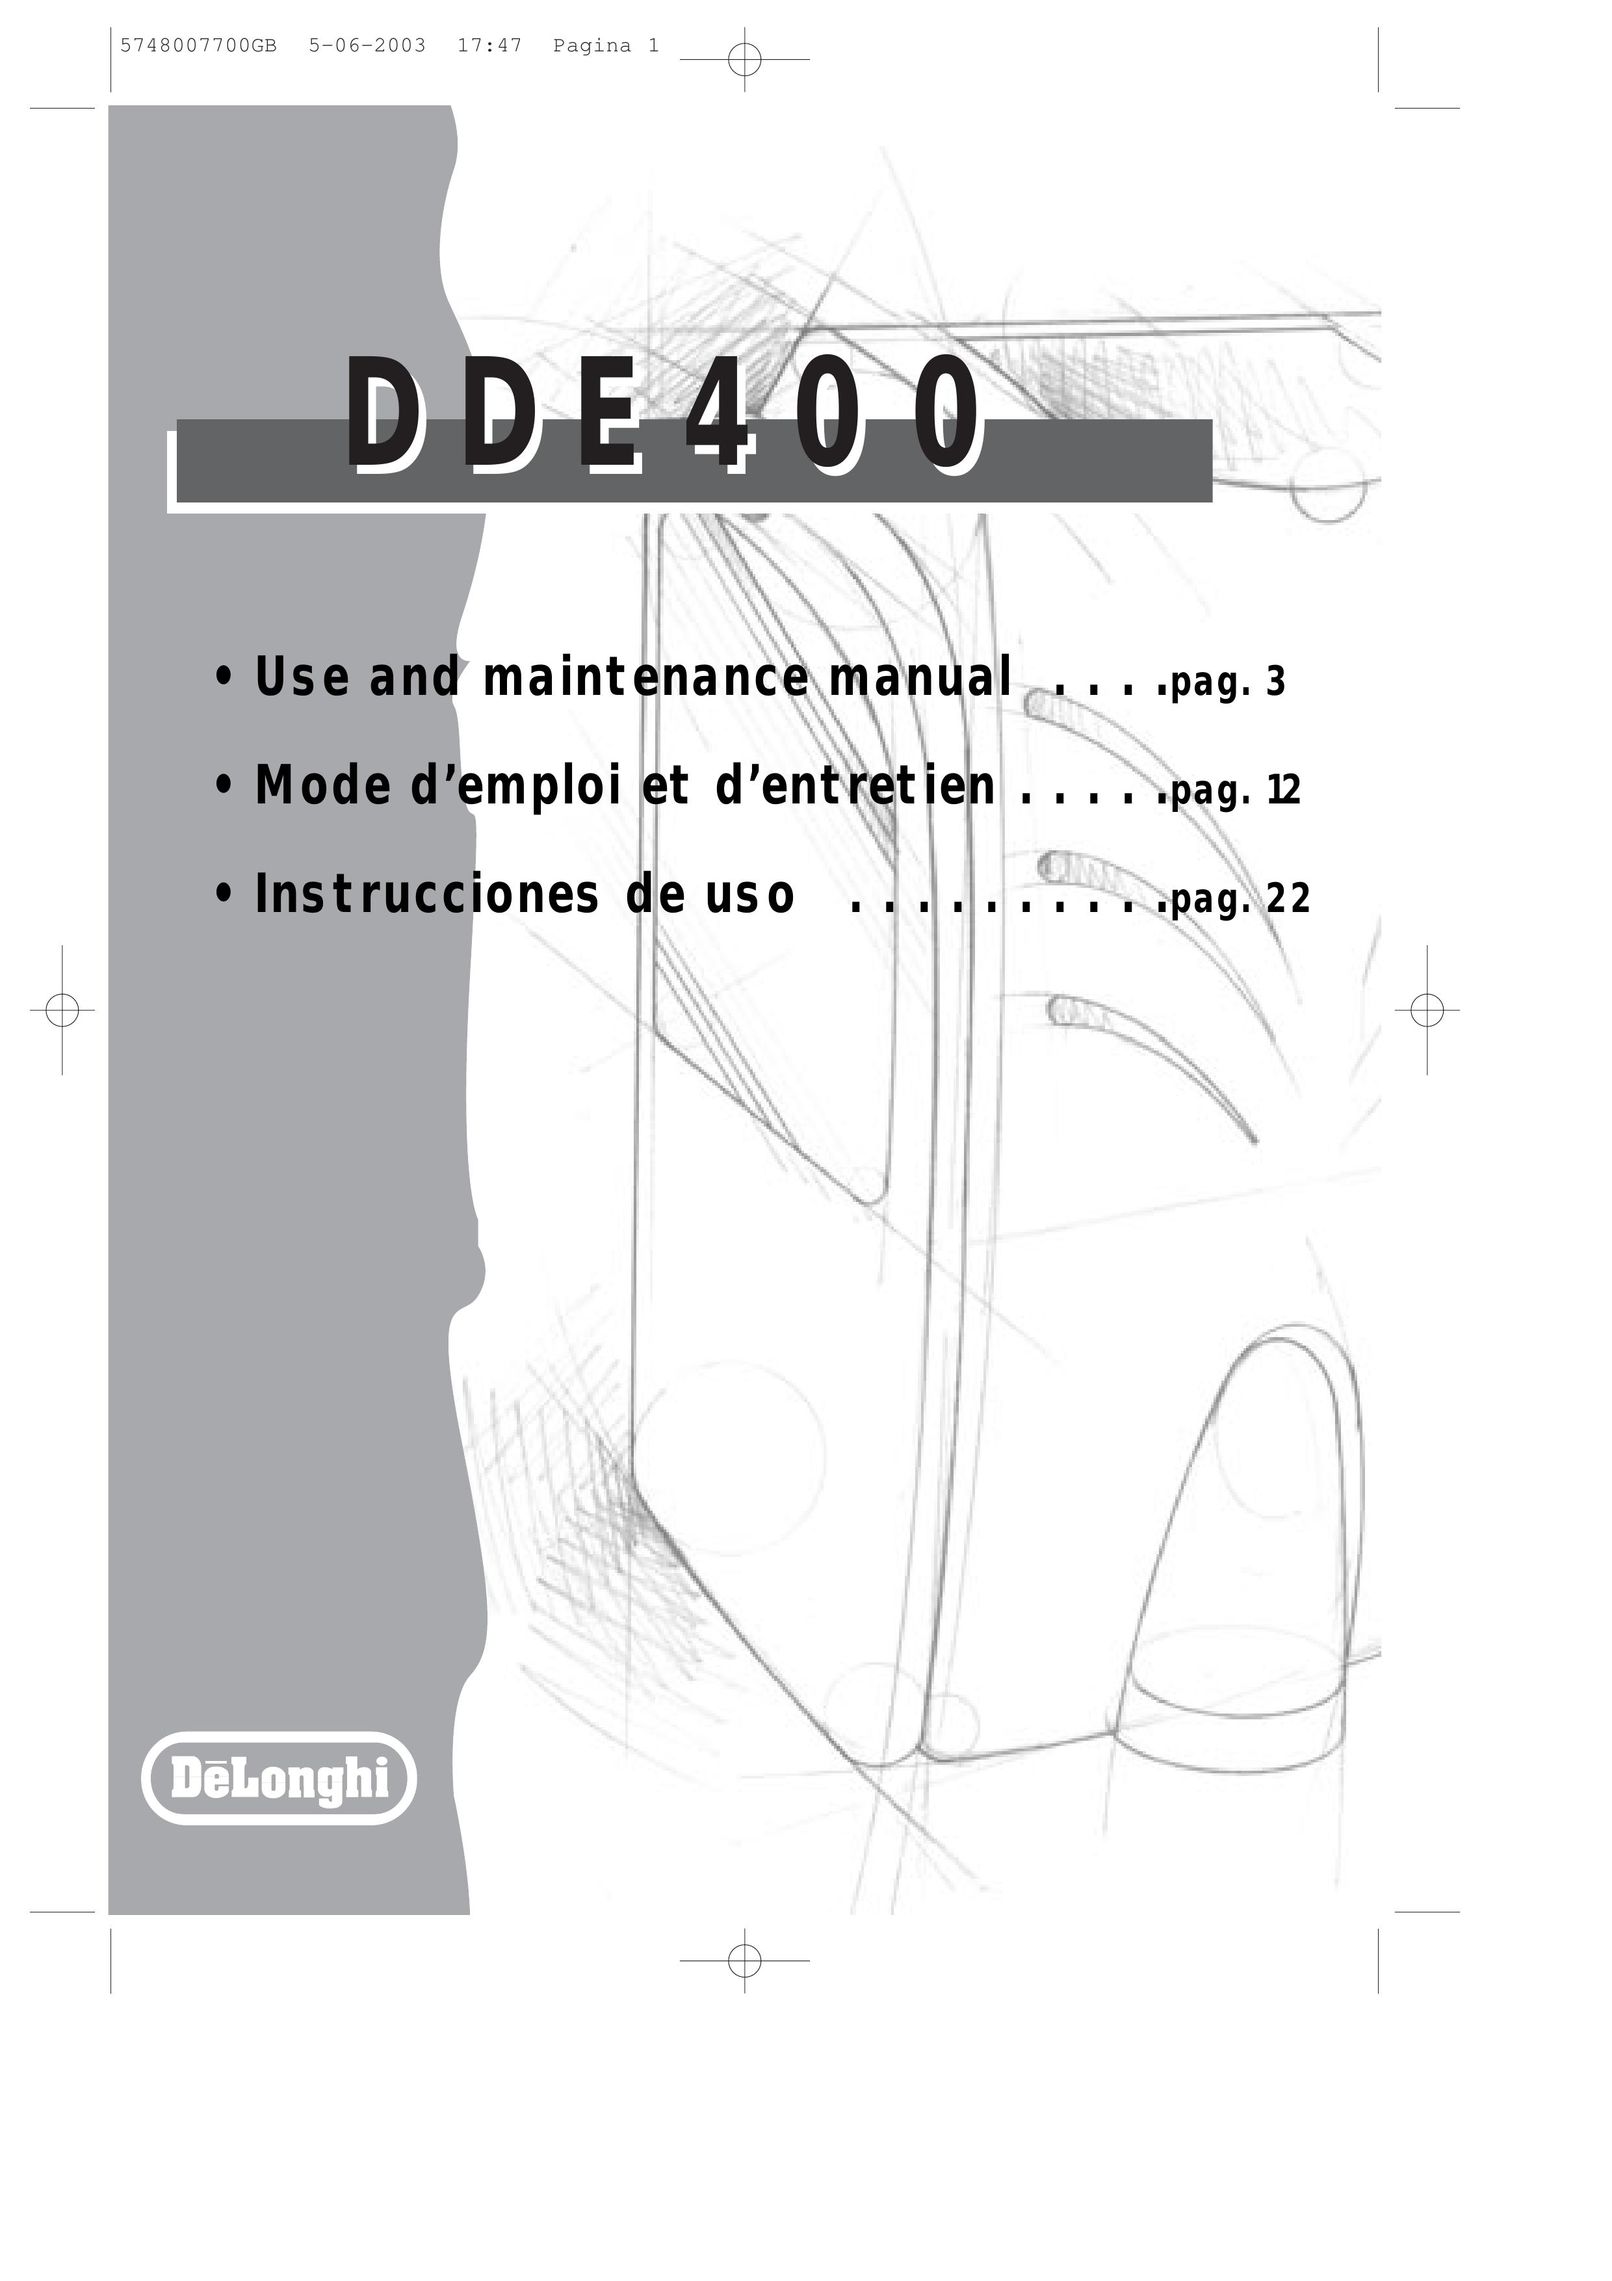 DeLonghi DDE400 Dehumidifier User Manual